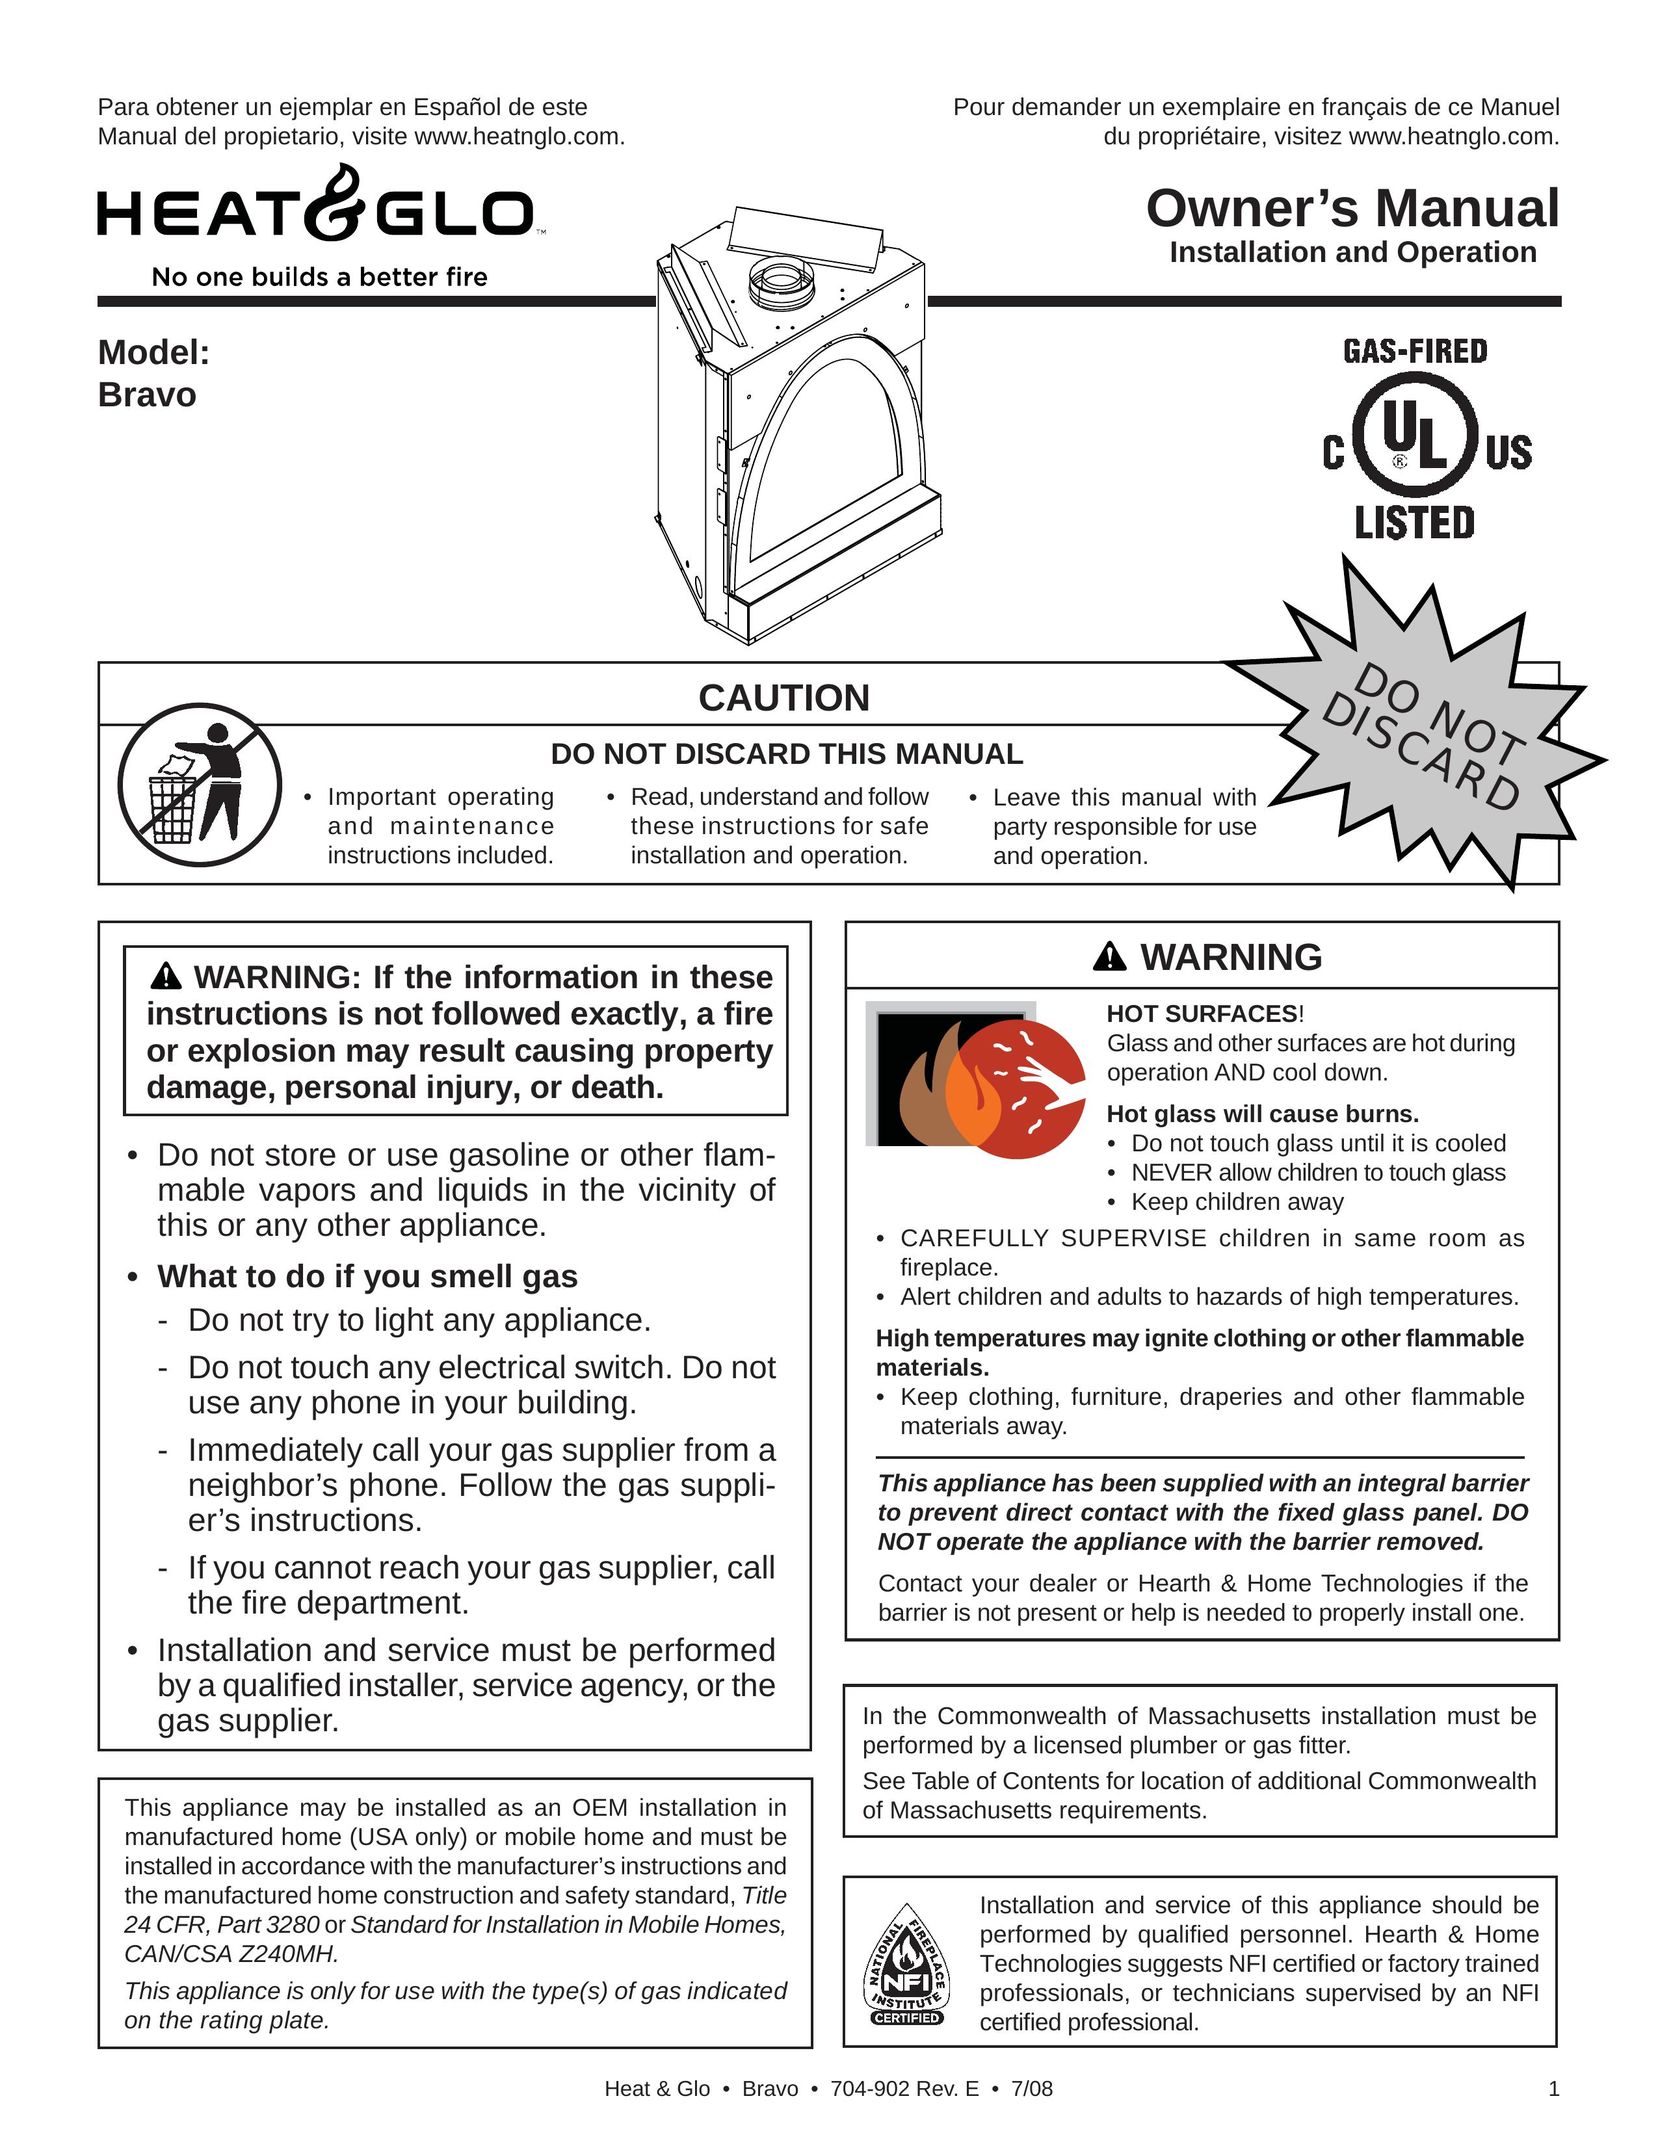 Heat & Glo LifeStyle 704-902 Gas Heater User Manual